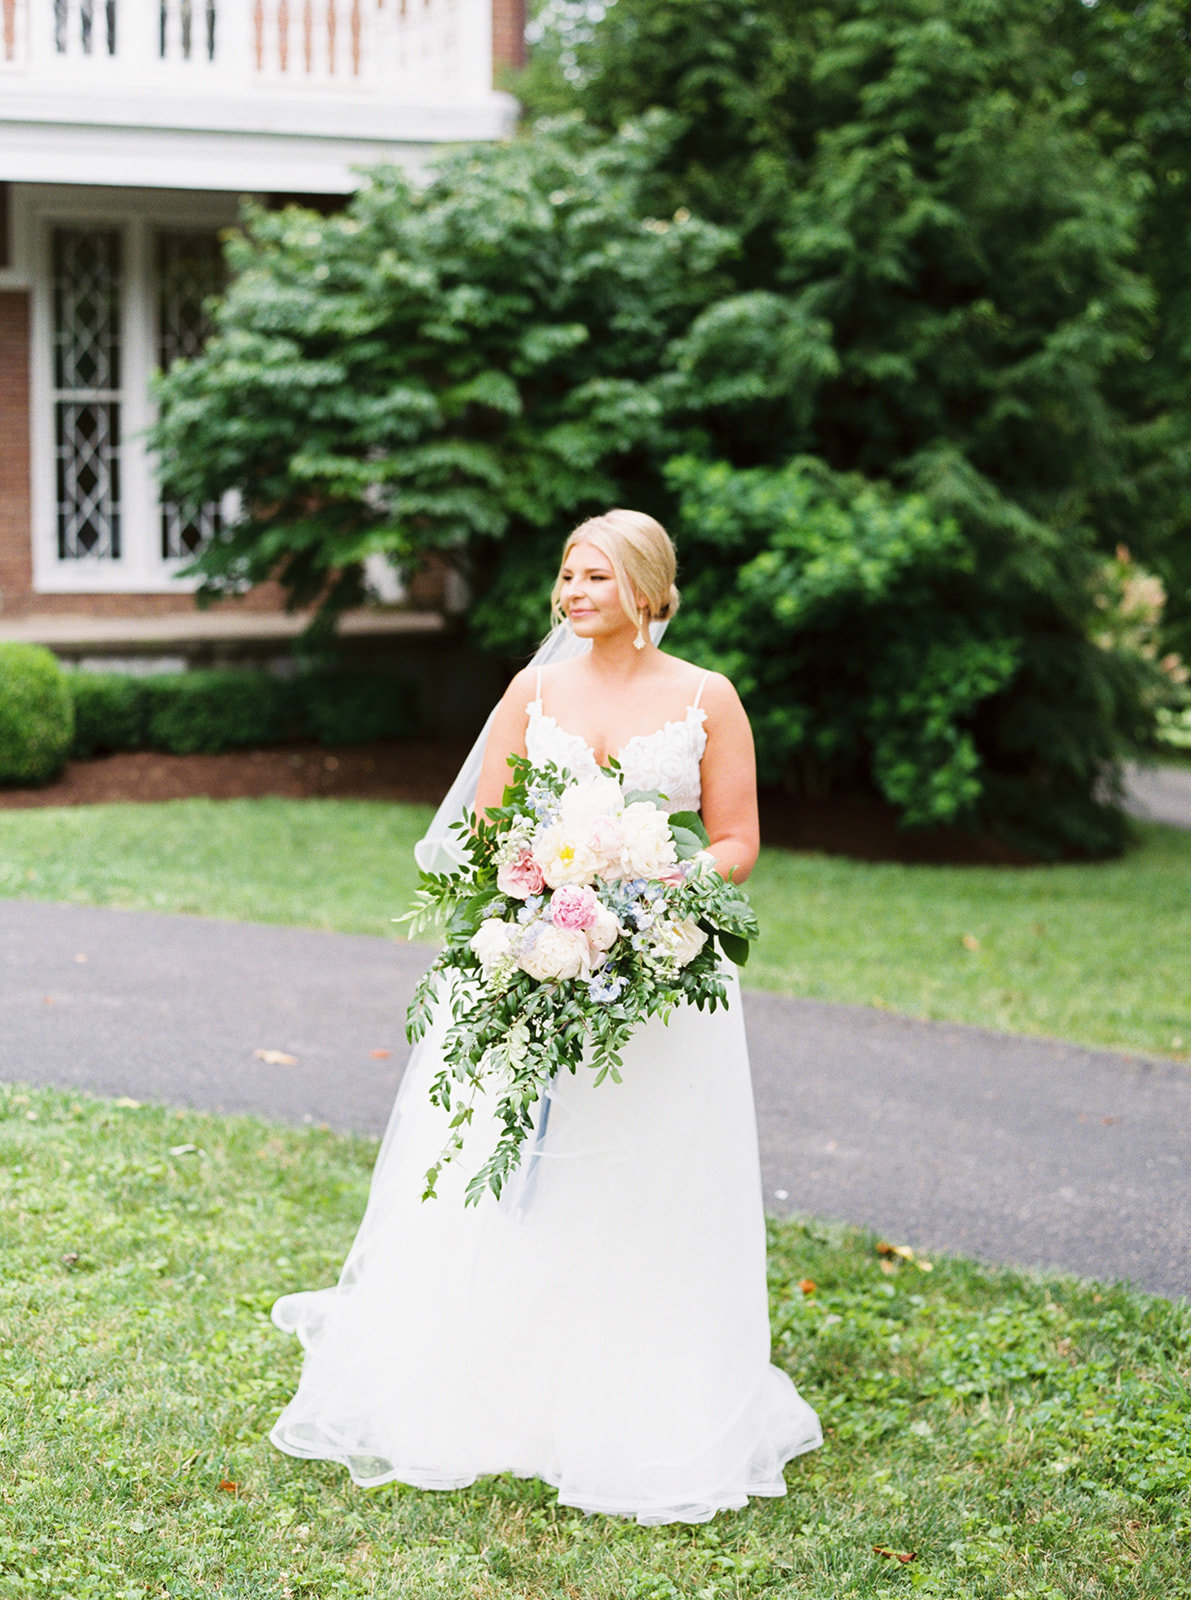 Warrenwood Manor - Kentucky Wedding Venue - Photo by Lyndsey Boyd00014